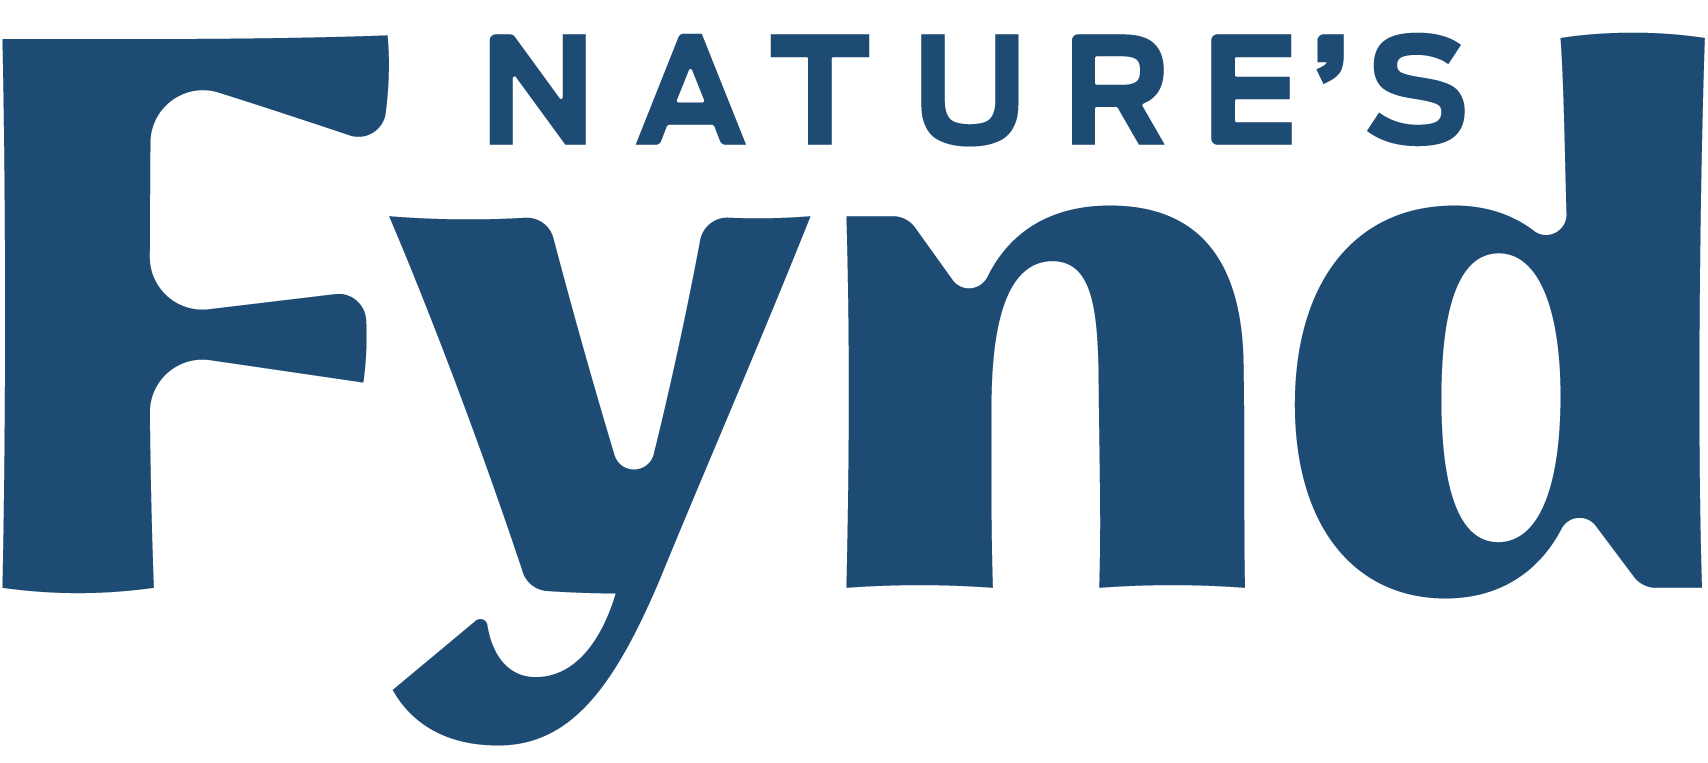 Vision Fund investment portfolio company Nature's Fynd's logo